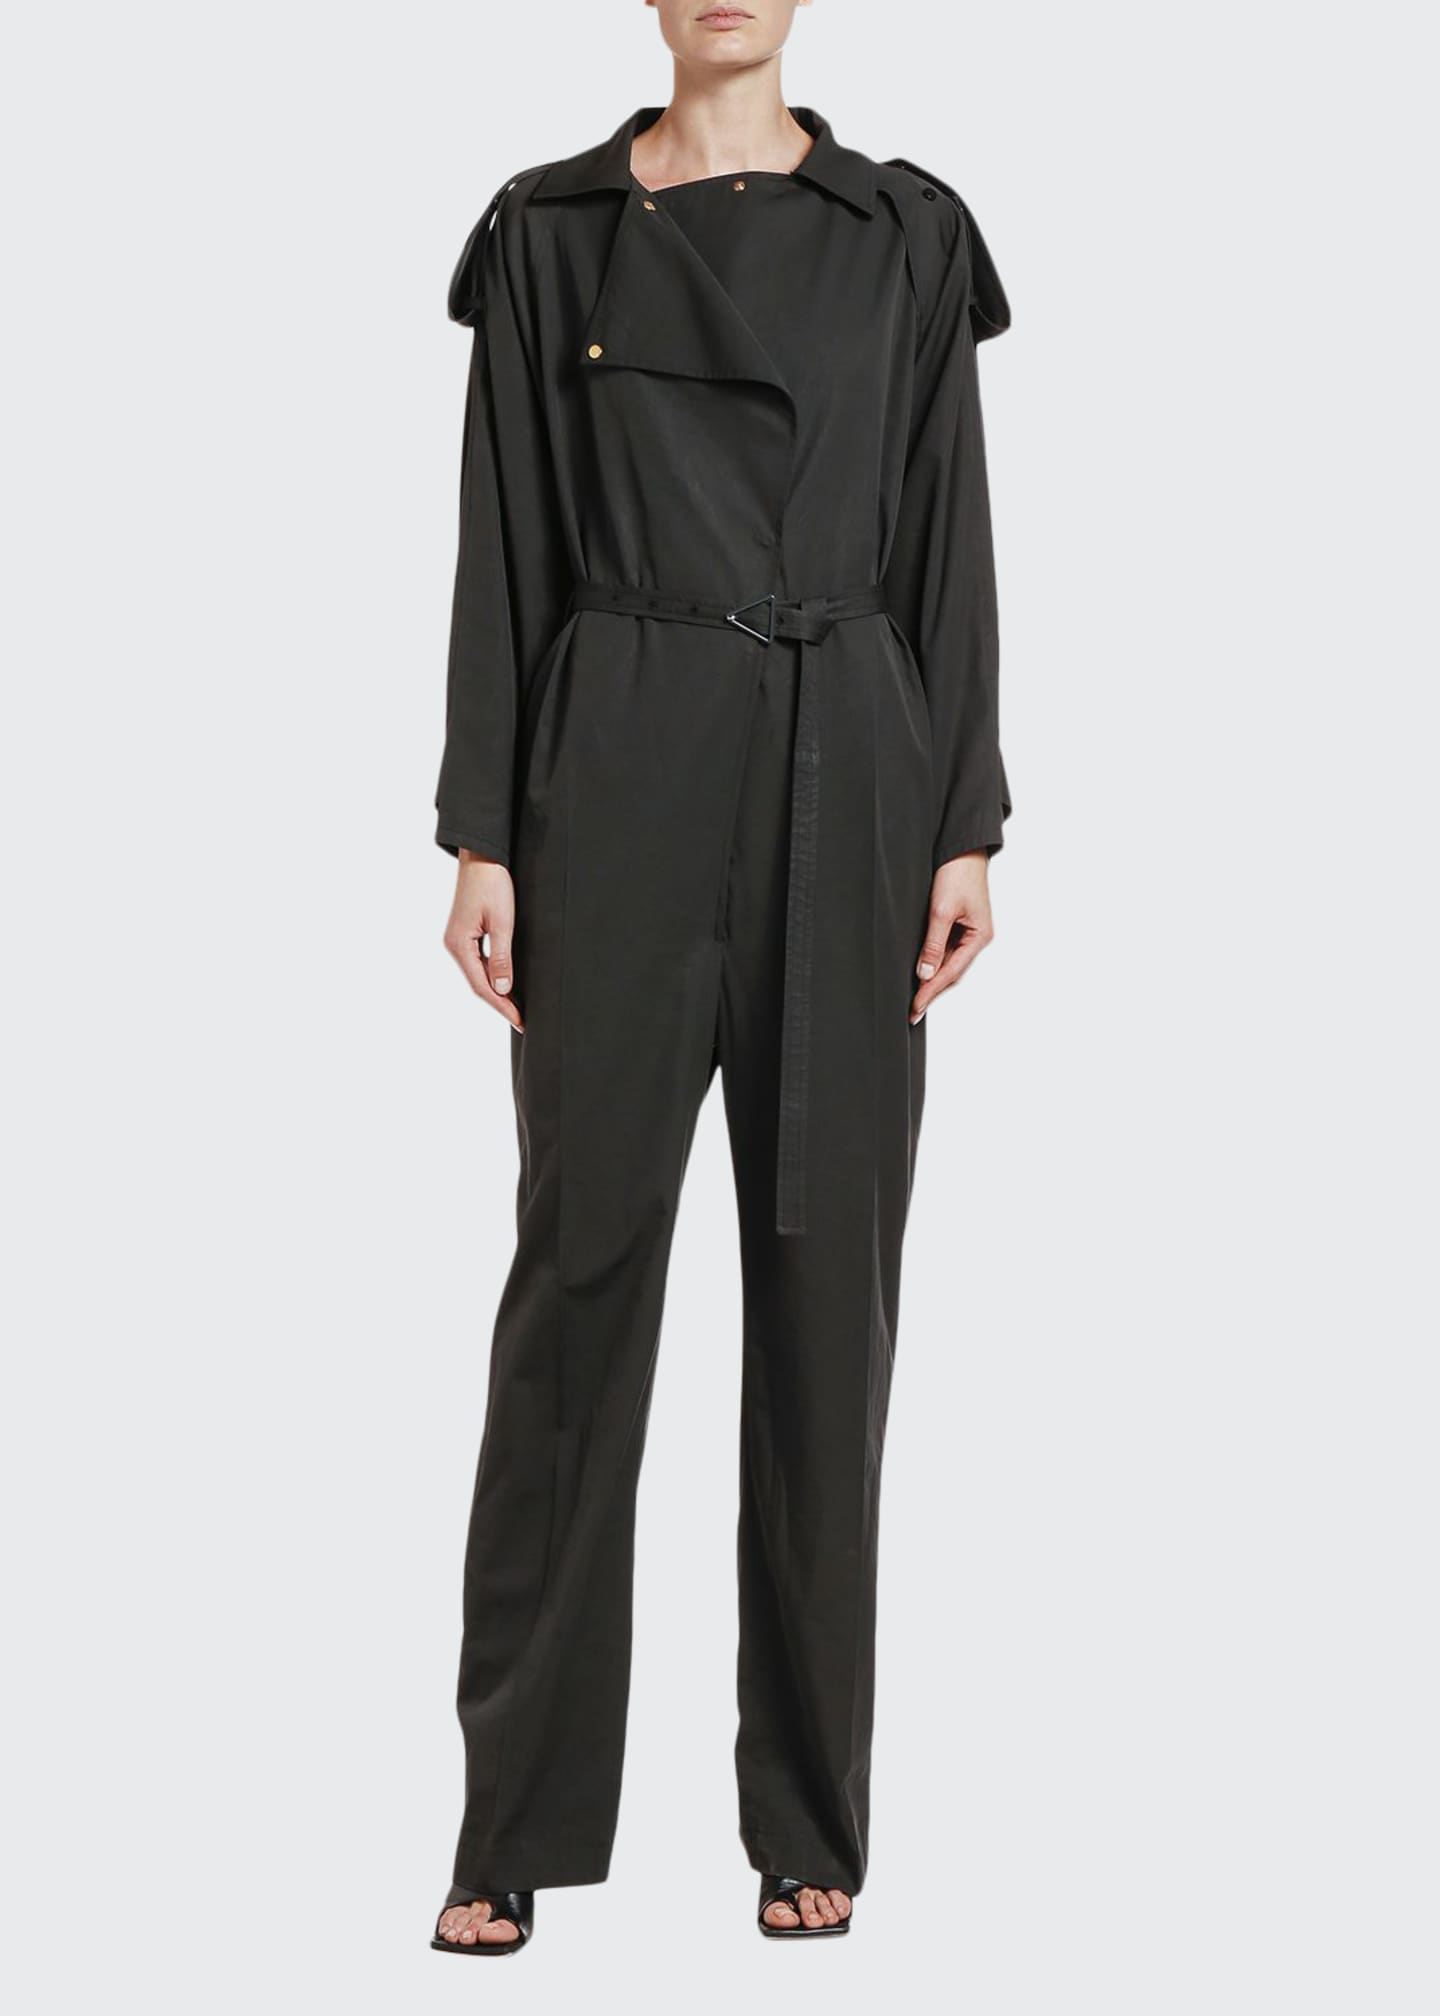 Michael Kors Collection Wool-Crepe Long-Sleeve Jumpsuit, Black